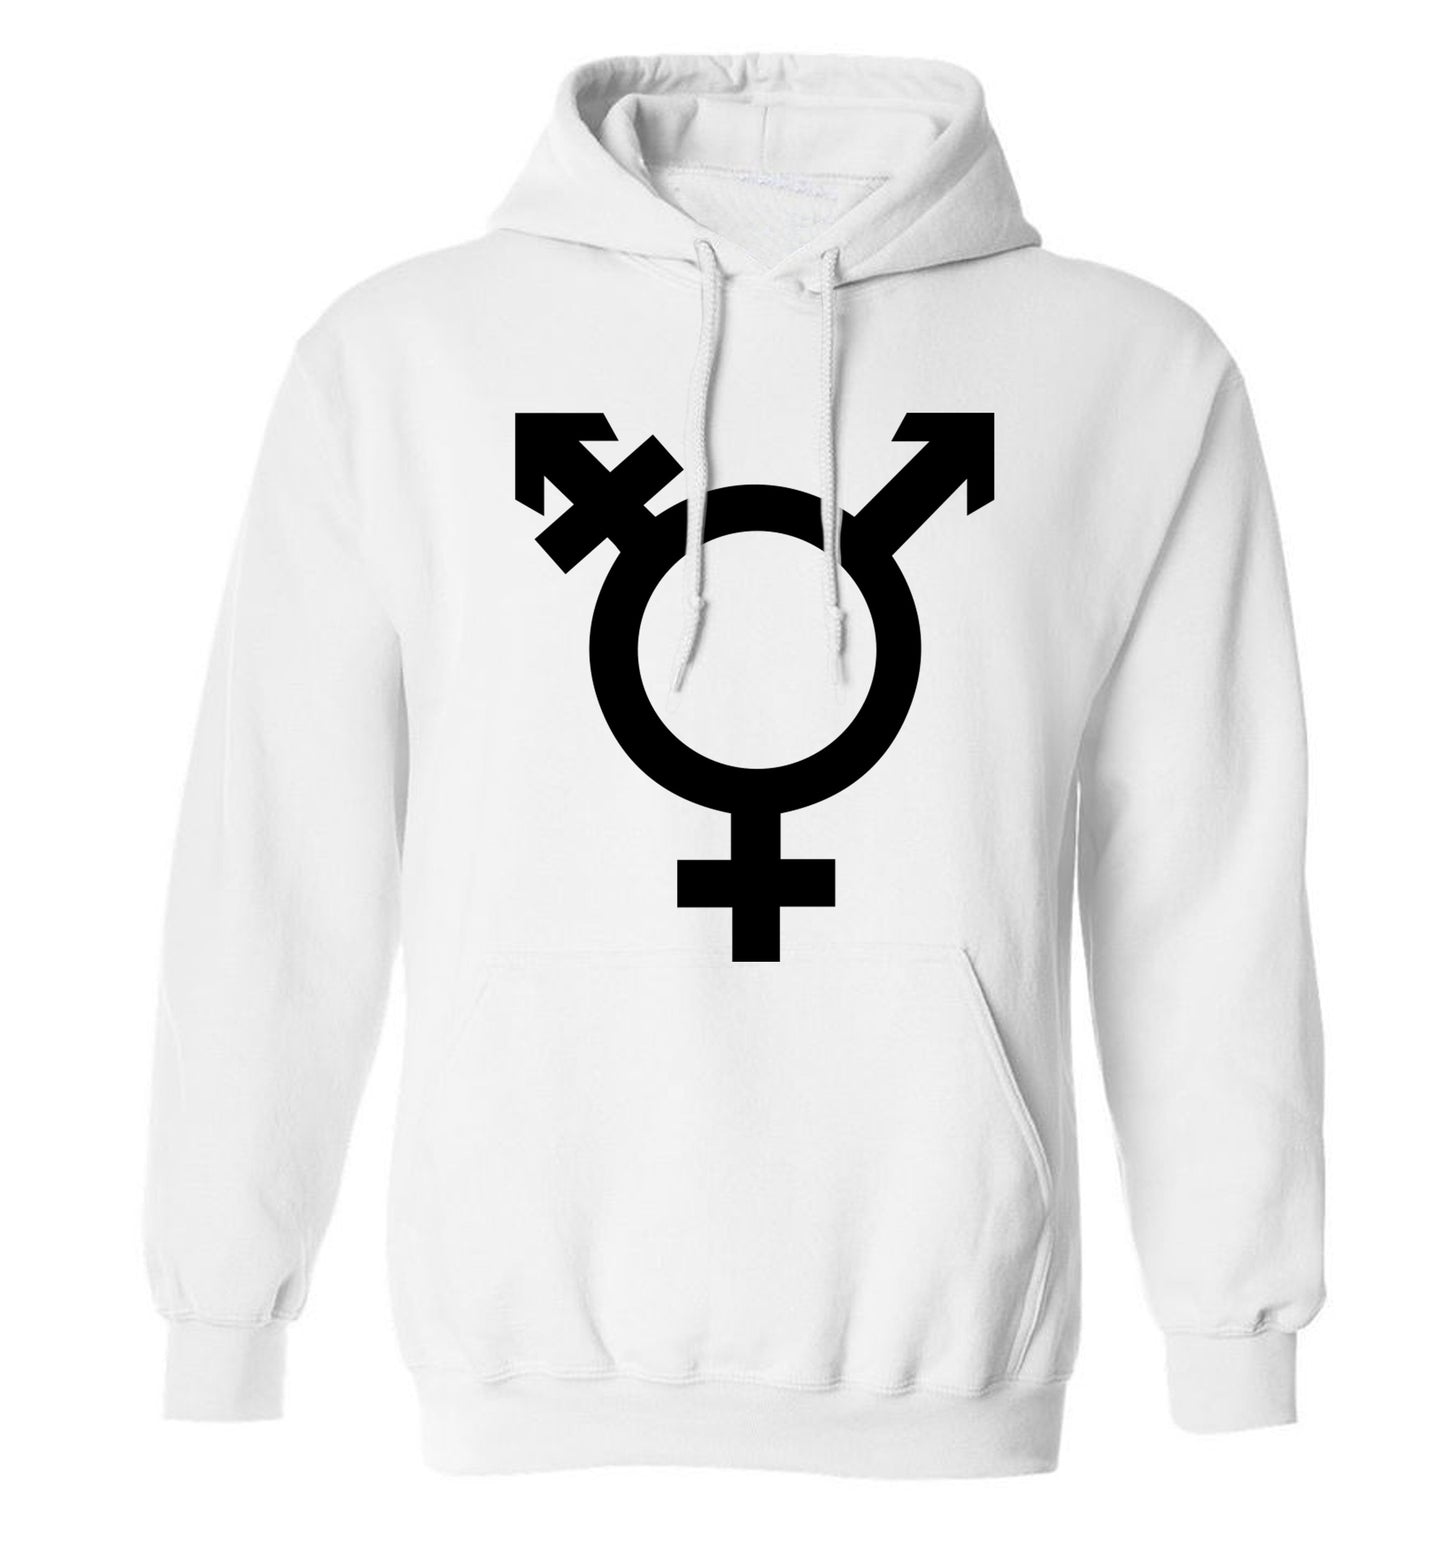 Gender neutral symbol large adults unisex white hoodie 2XL